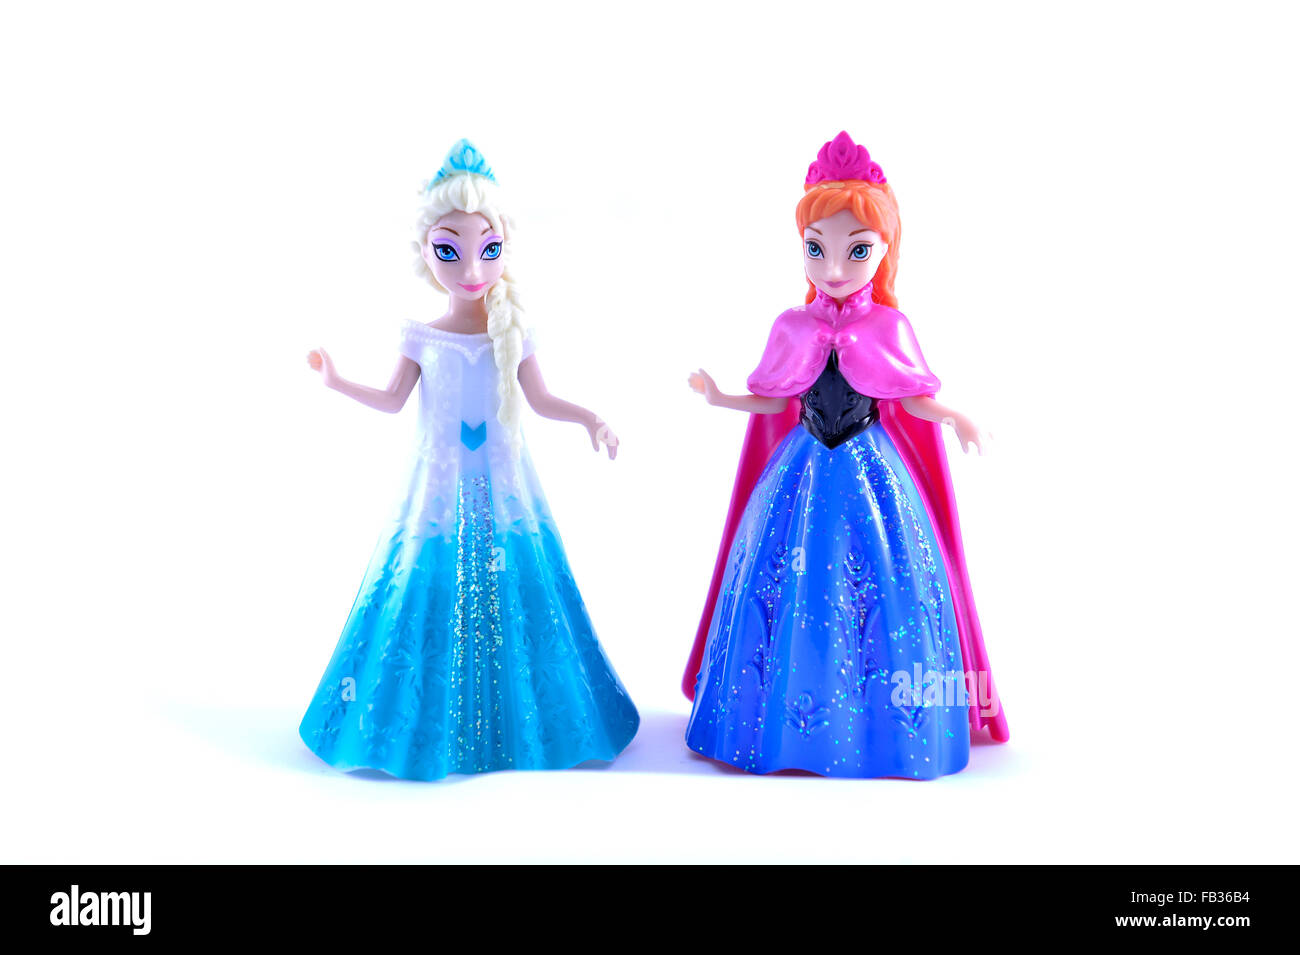 Disney, Frozen Magiclip Anna & Elsa Princess Toy Dolls Stock Photo